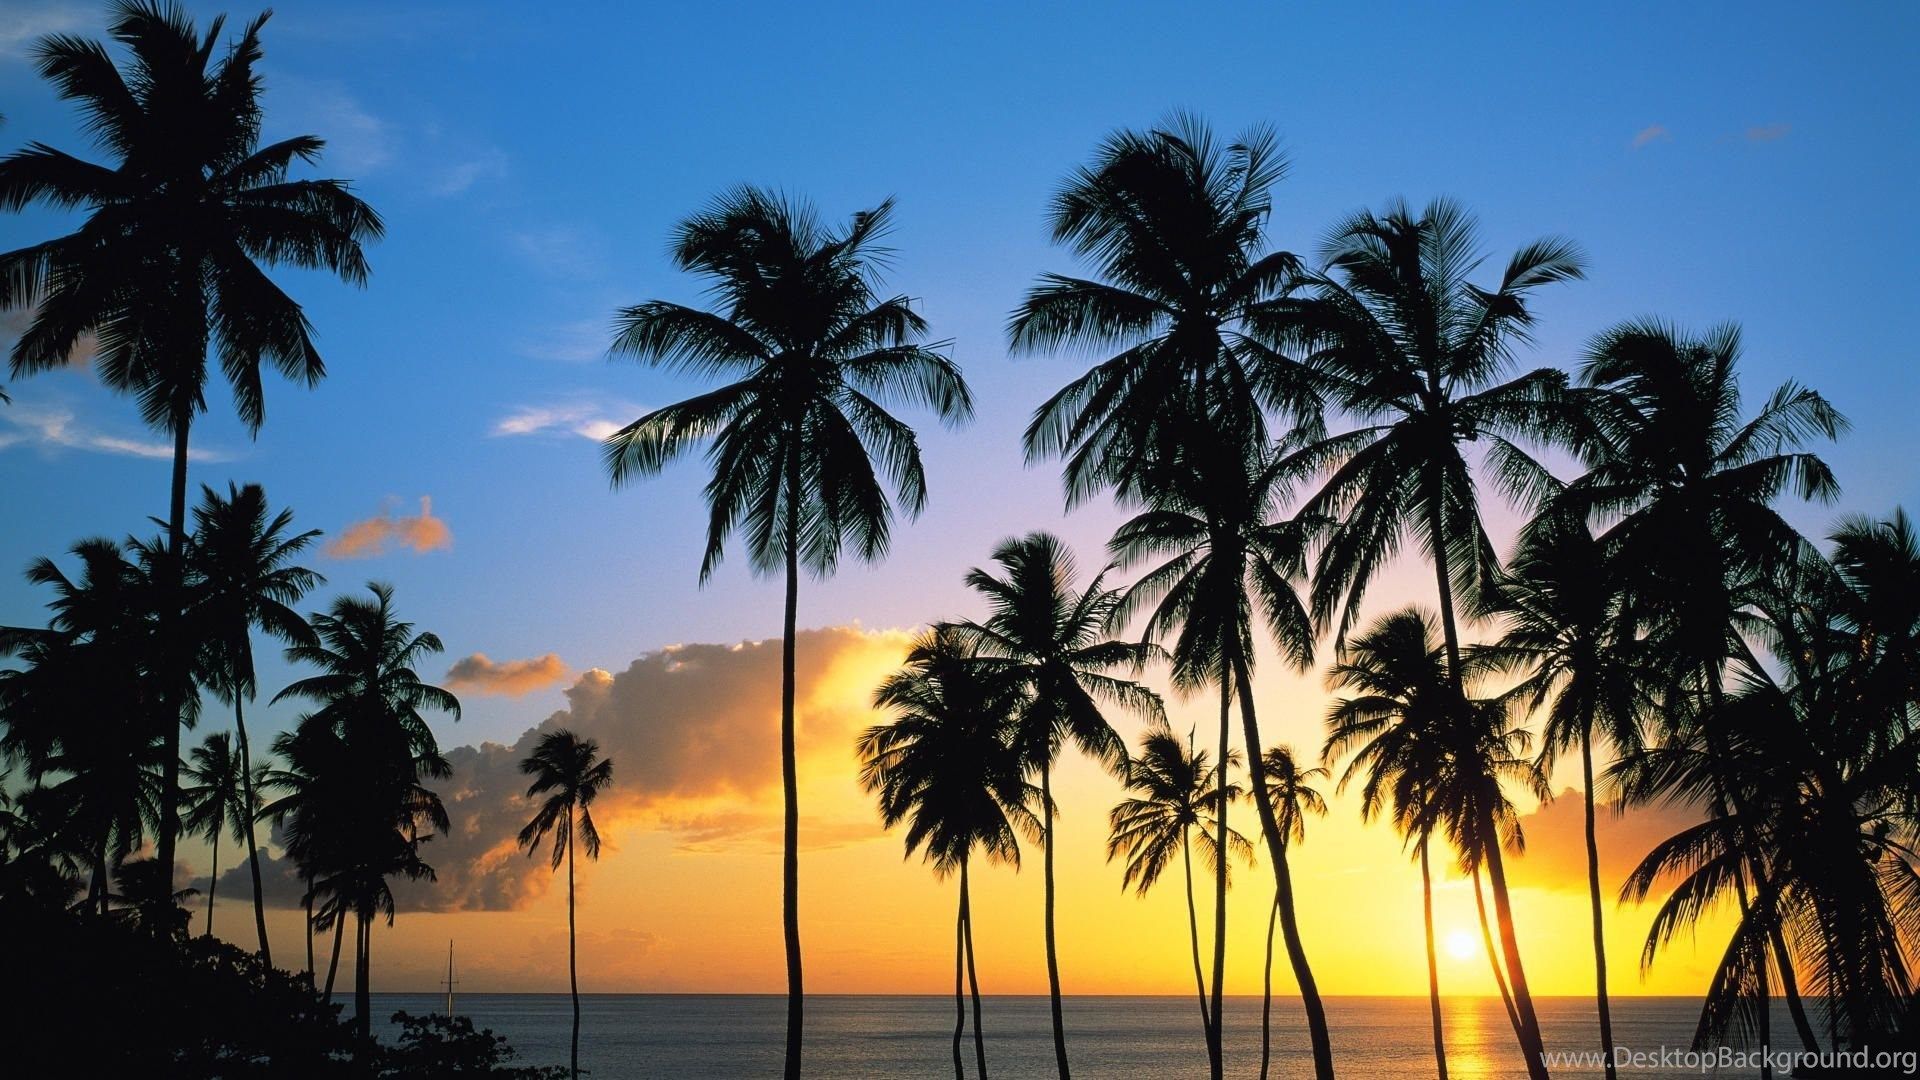 Download Palm Tree Sunset Wallpaper .desktopbackground.org